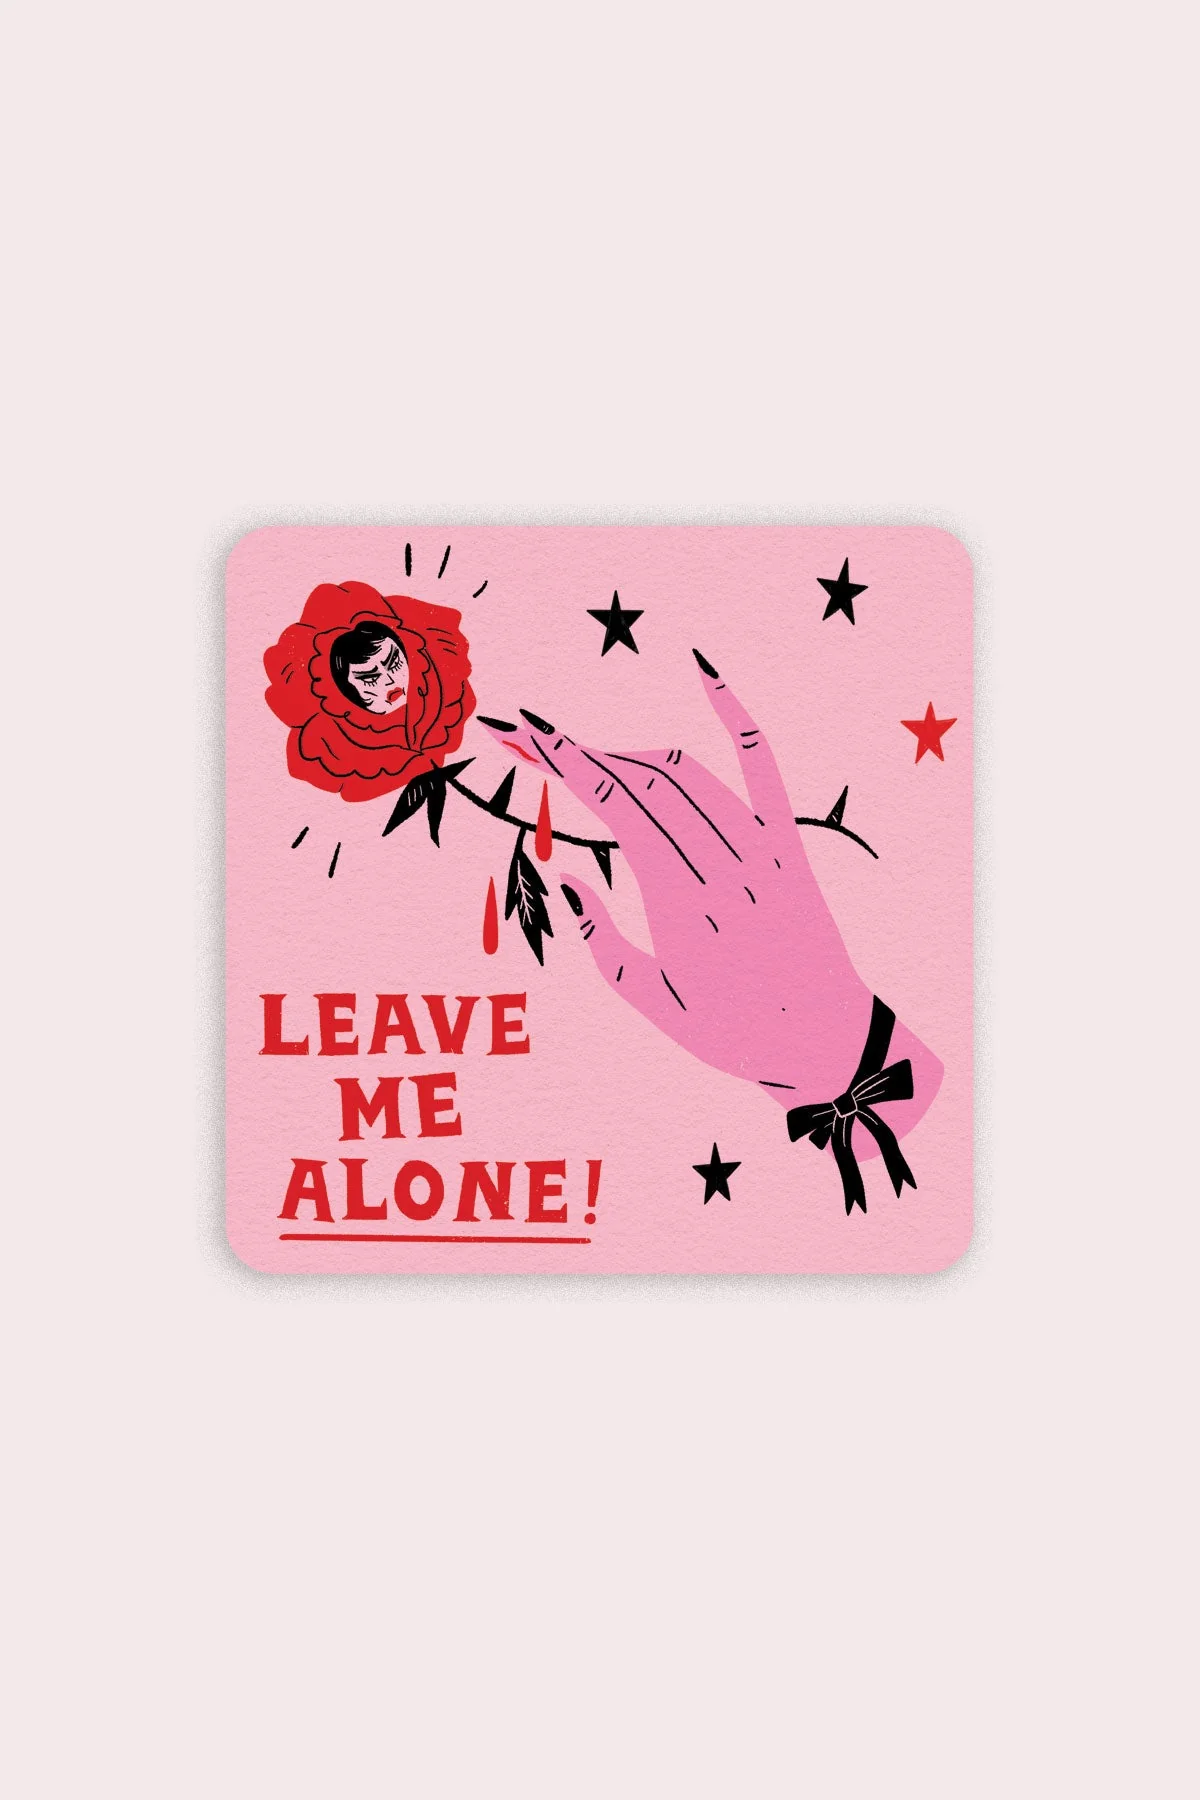 Leave Me Alone Vinyl Sticker